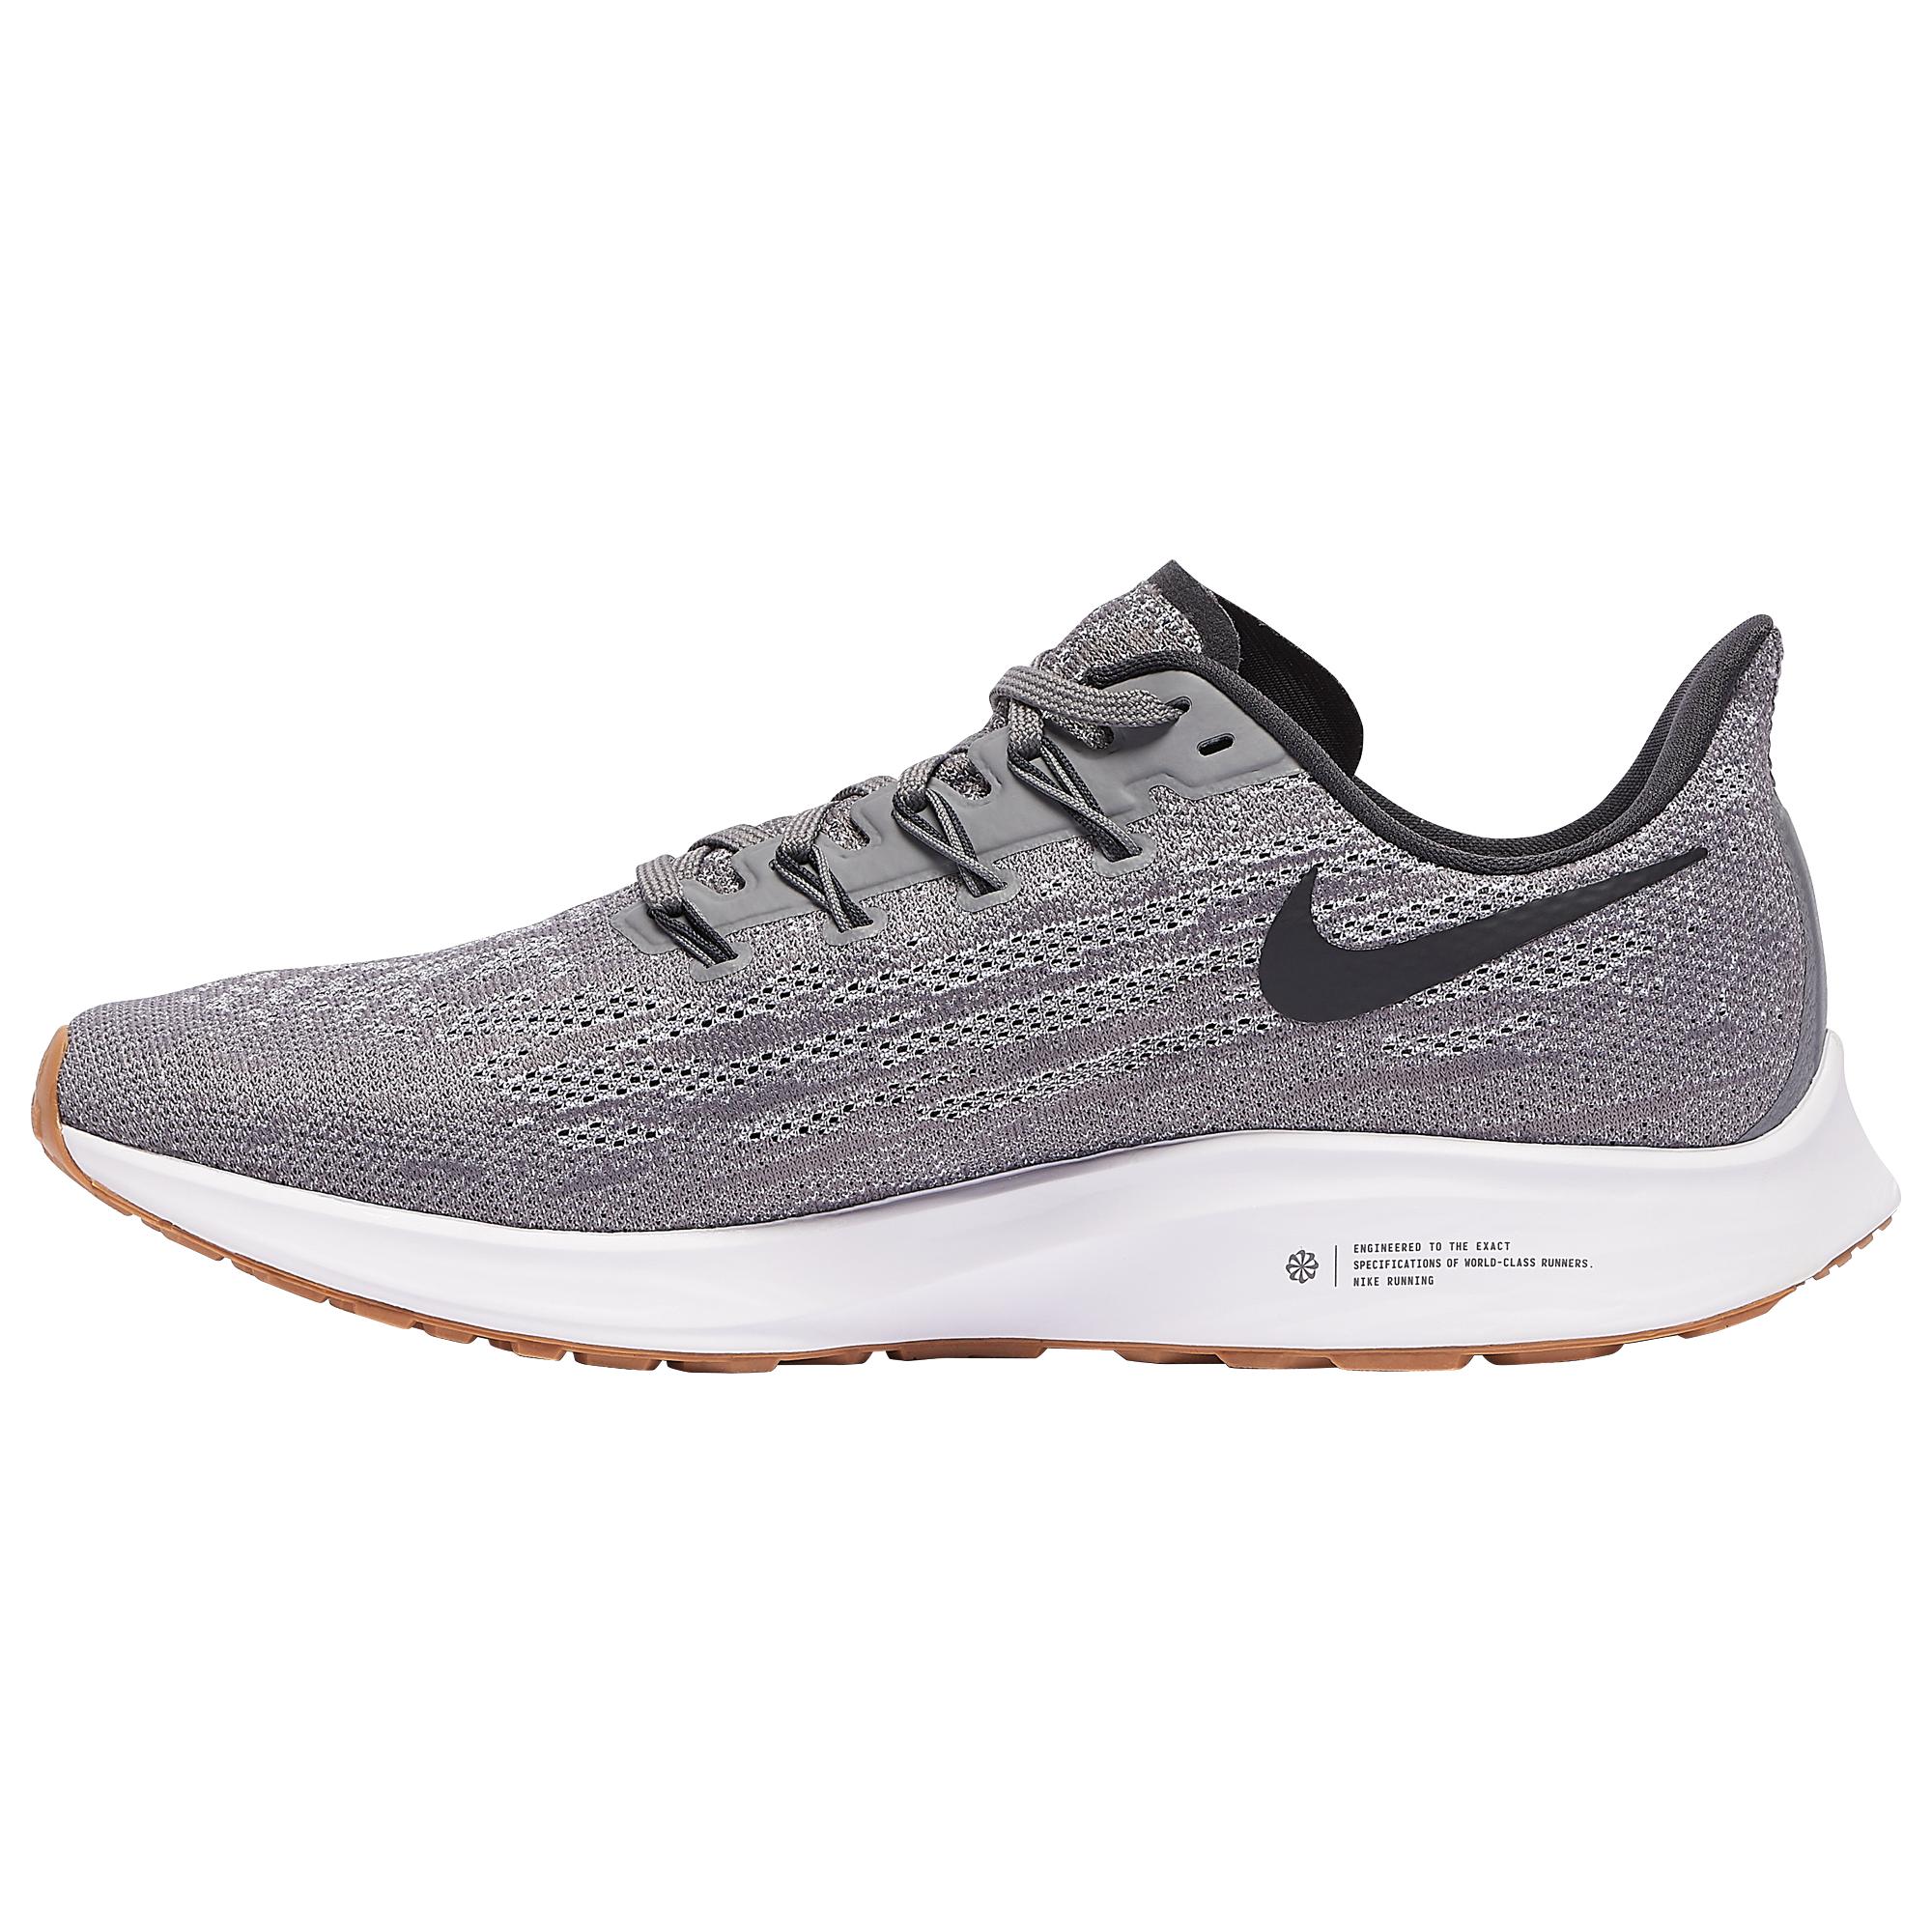 Nike Air Zoom Pegasus 36 Running Shoe in Grey (Gray) for Men - Save 40% |  Lyst